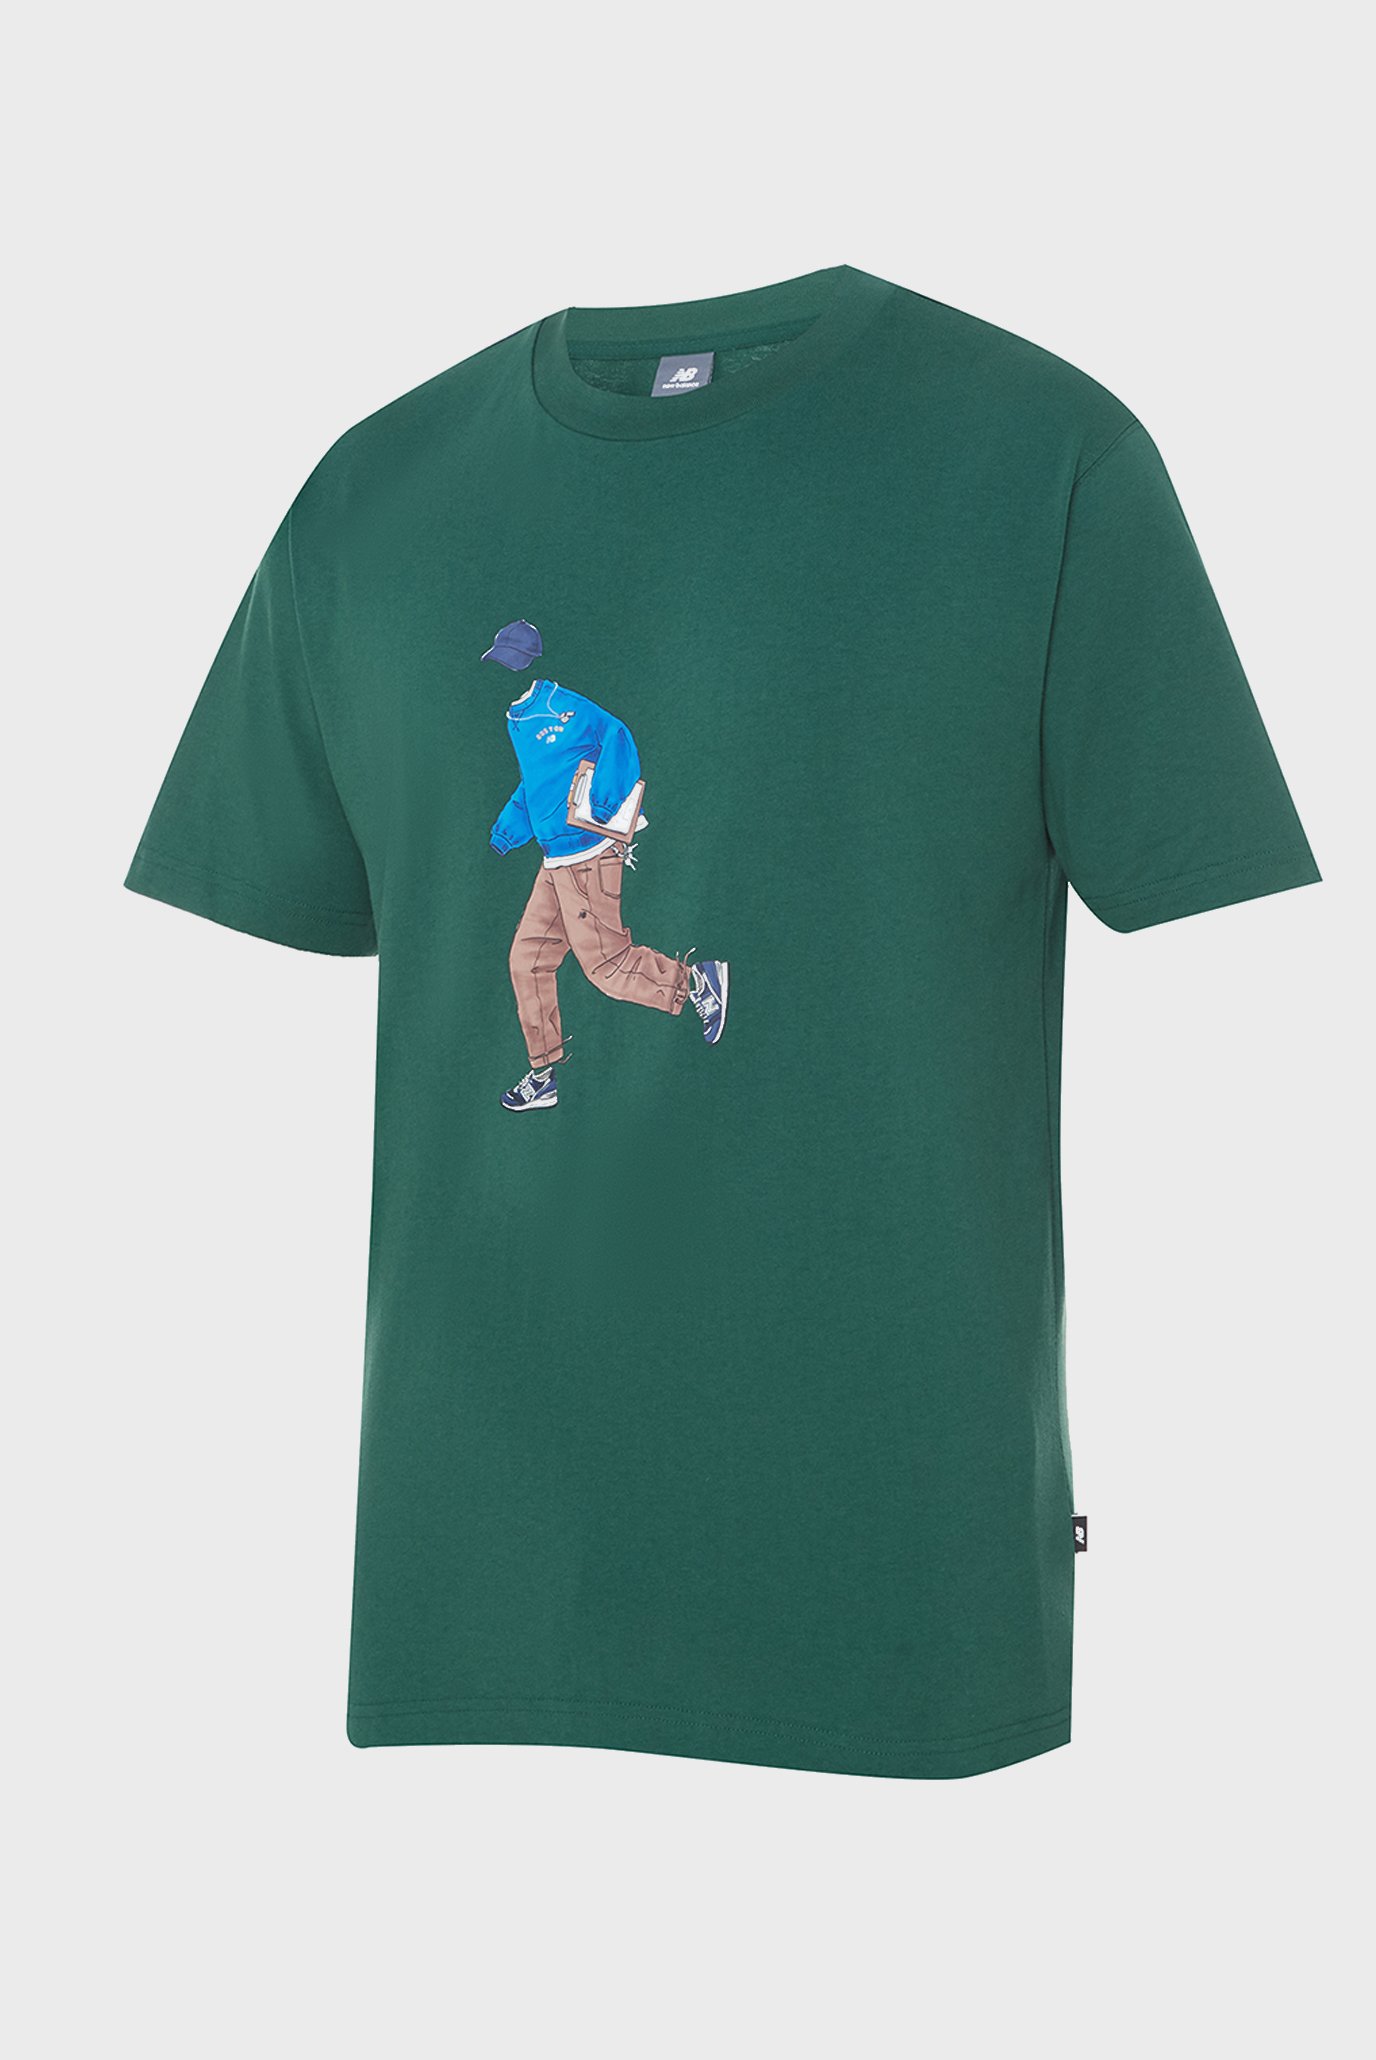 Мужская зеленая футболка NB Athletics Graphics 1